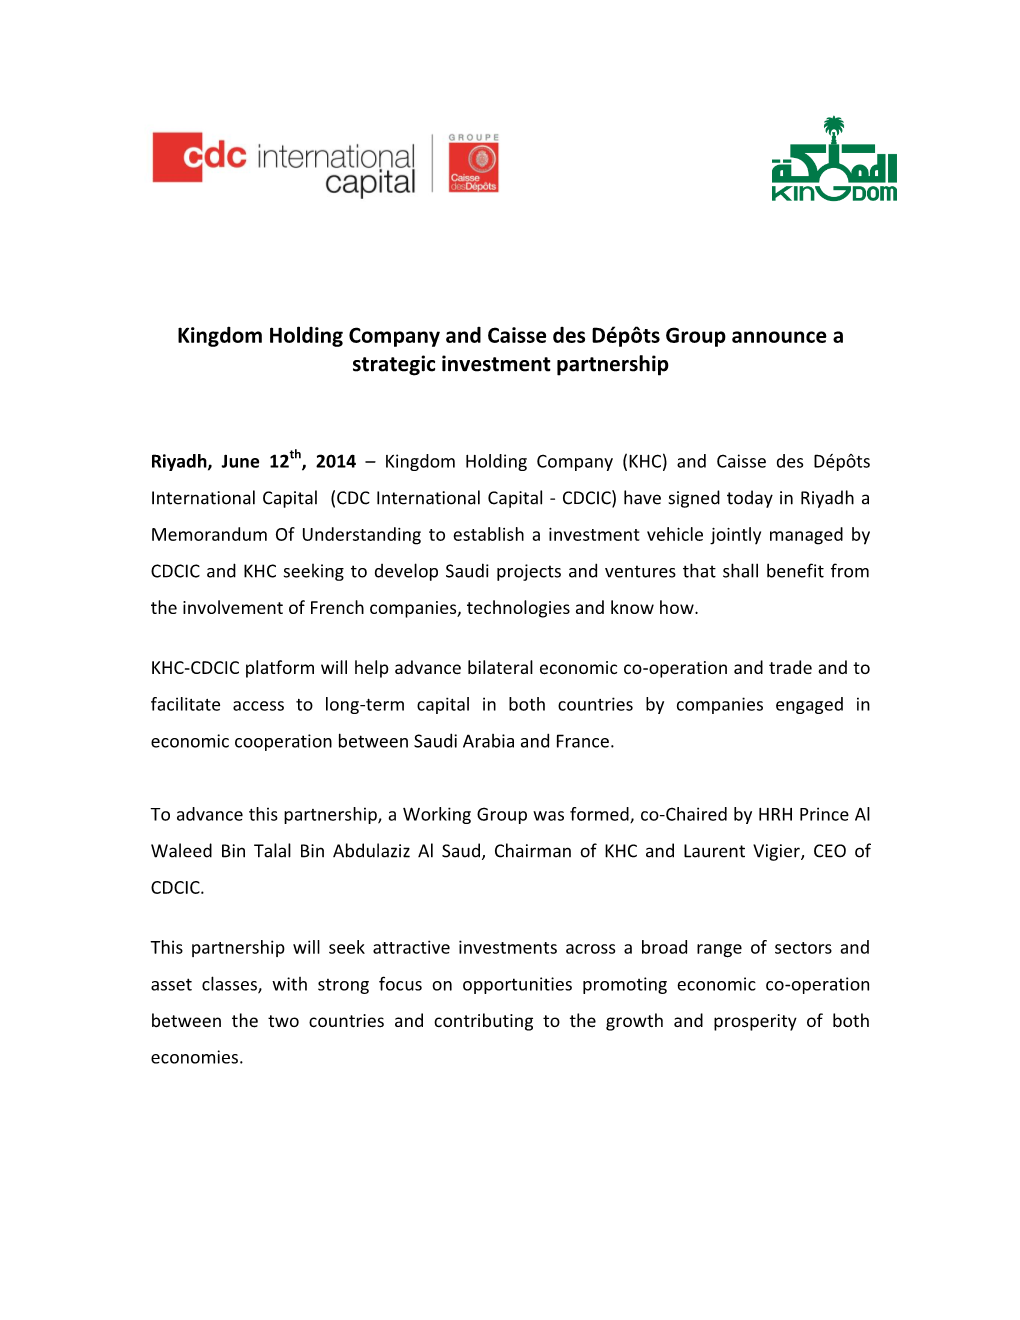 Kingdom Holding Company and Caisse Des Dépôts Group Announce a Strategic Investment Partnership